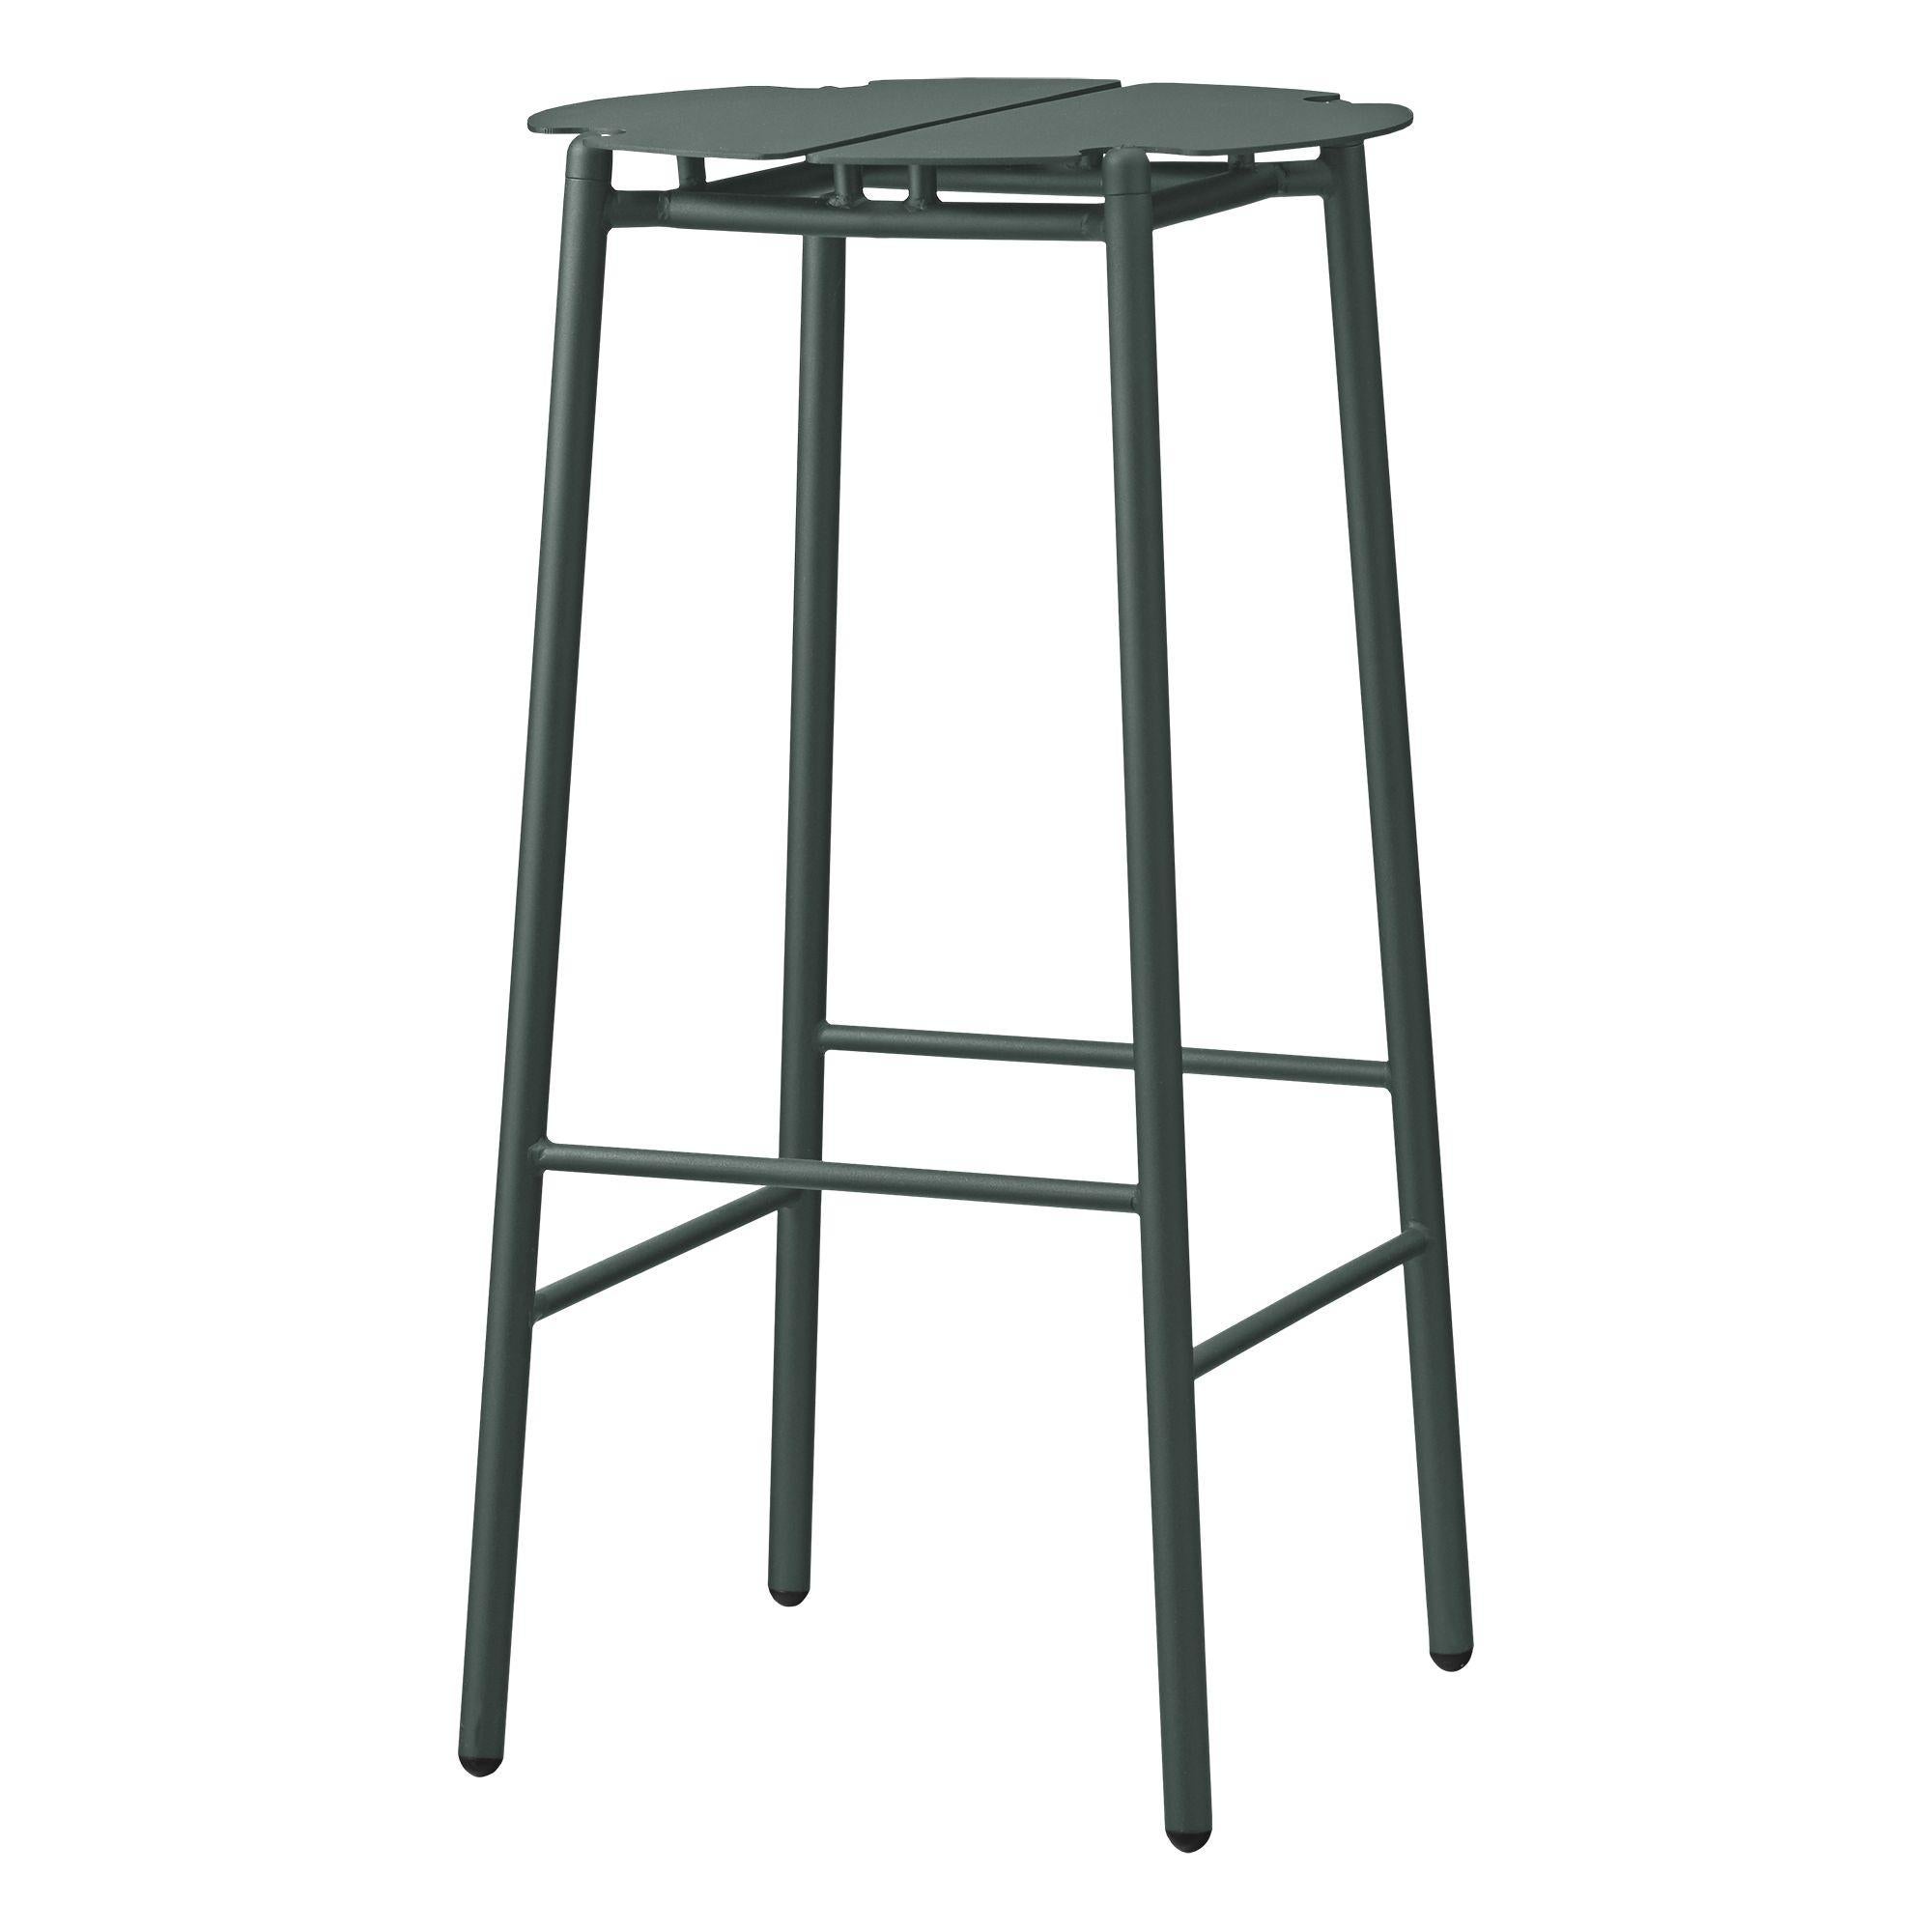 diameter of a bar stool